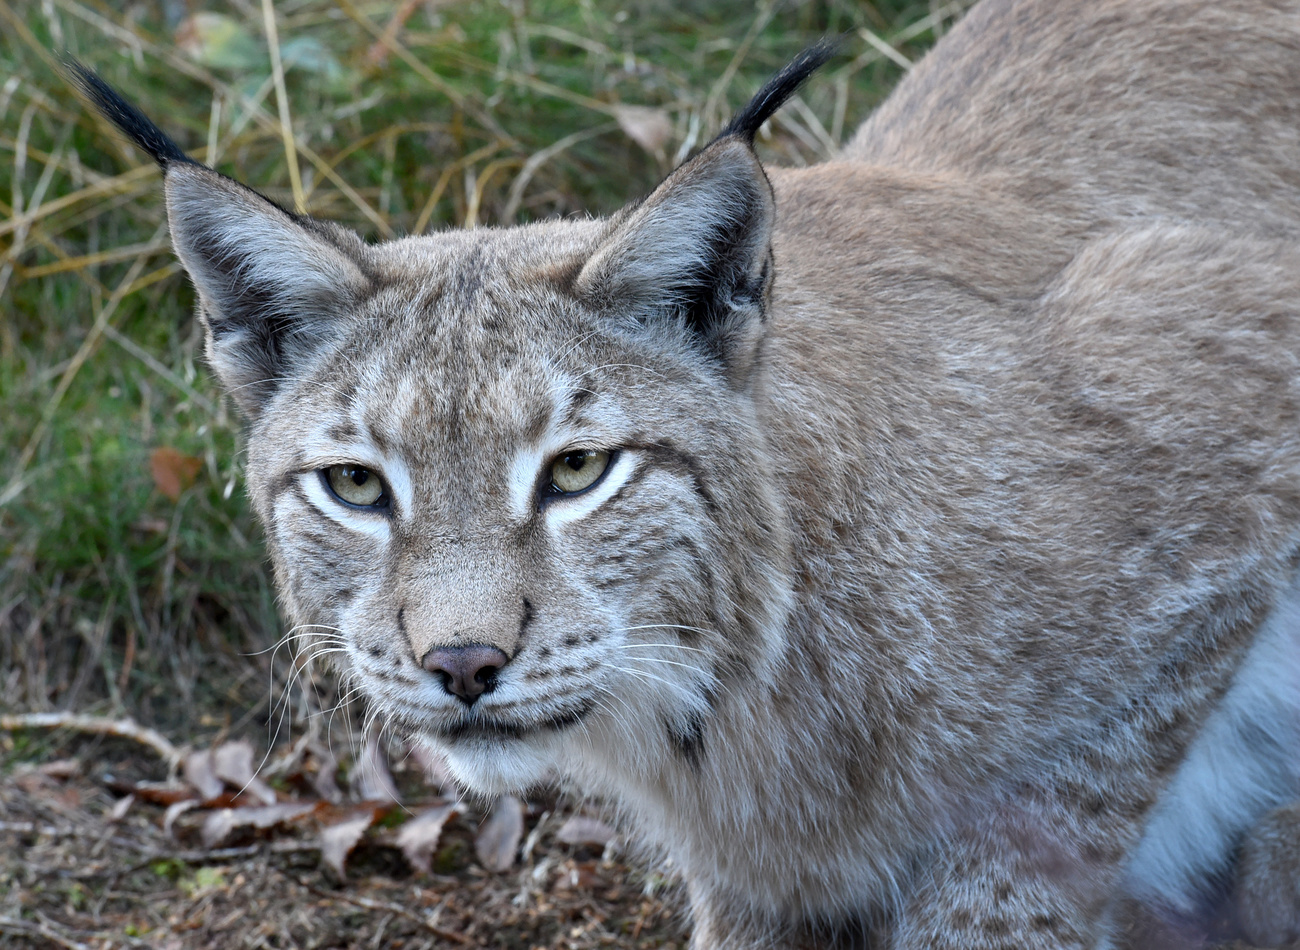 Lynx thrive in Switzerland 50 years after reintroduction - SWI swissinfo.ch